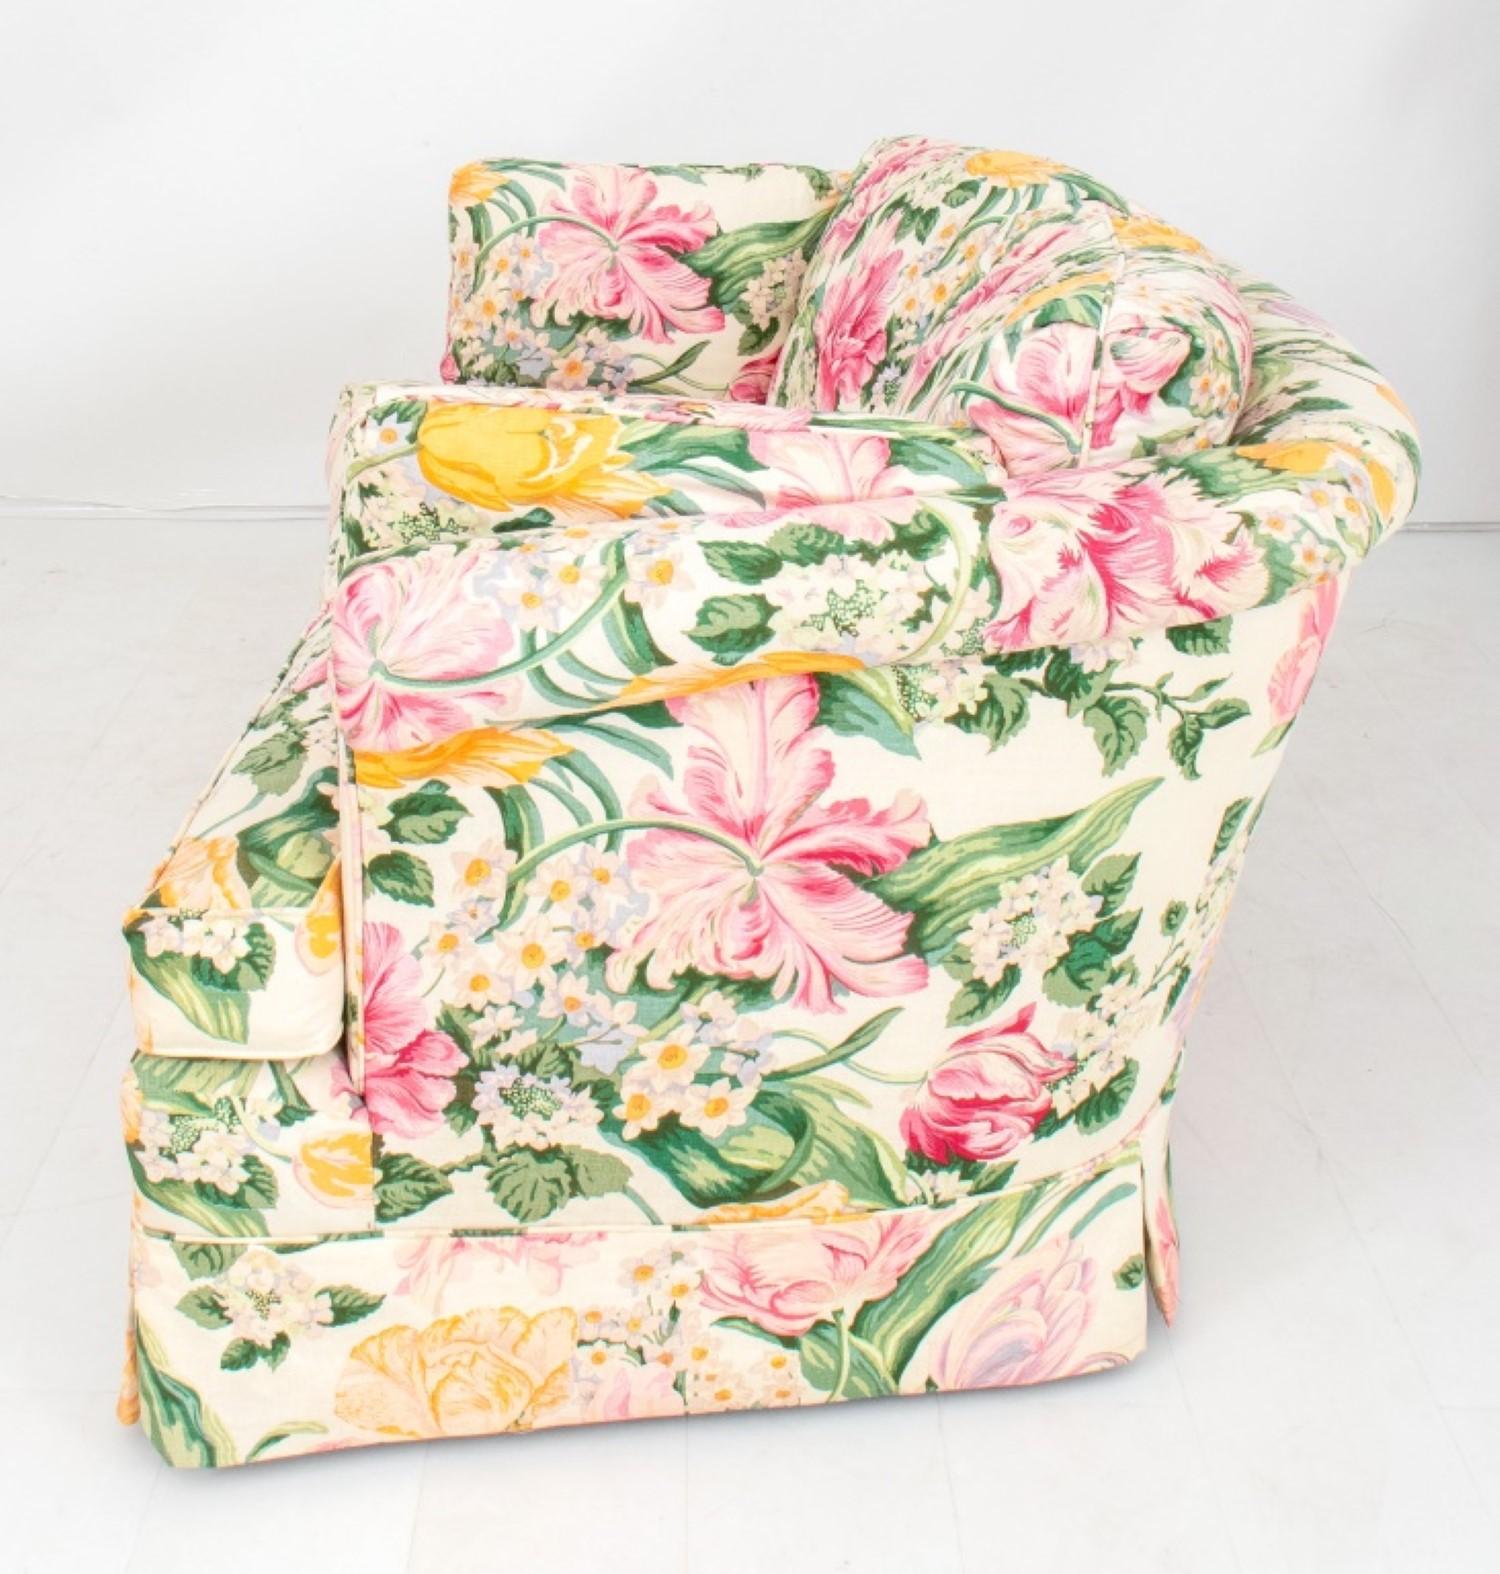 
Les dimensions du canapé Floral Chintz Slipcovered Upholstered Sofa sont approximatives :

Hauteur : 28